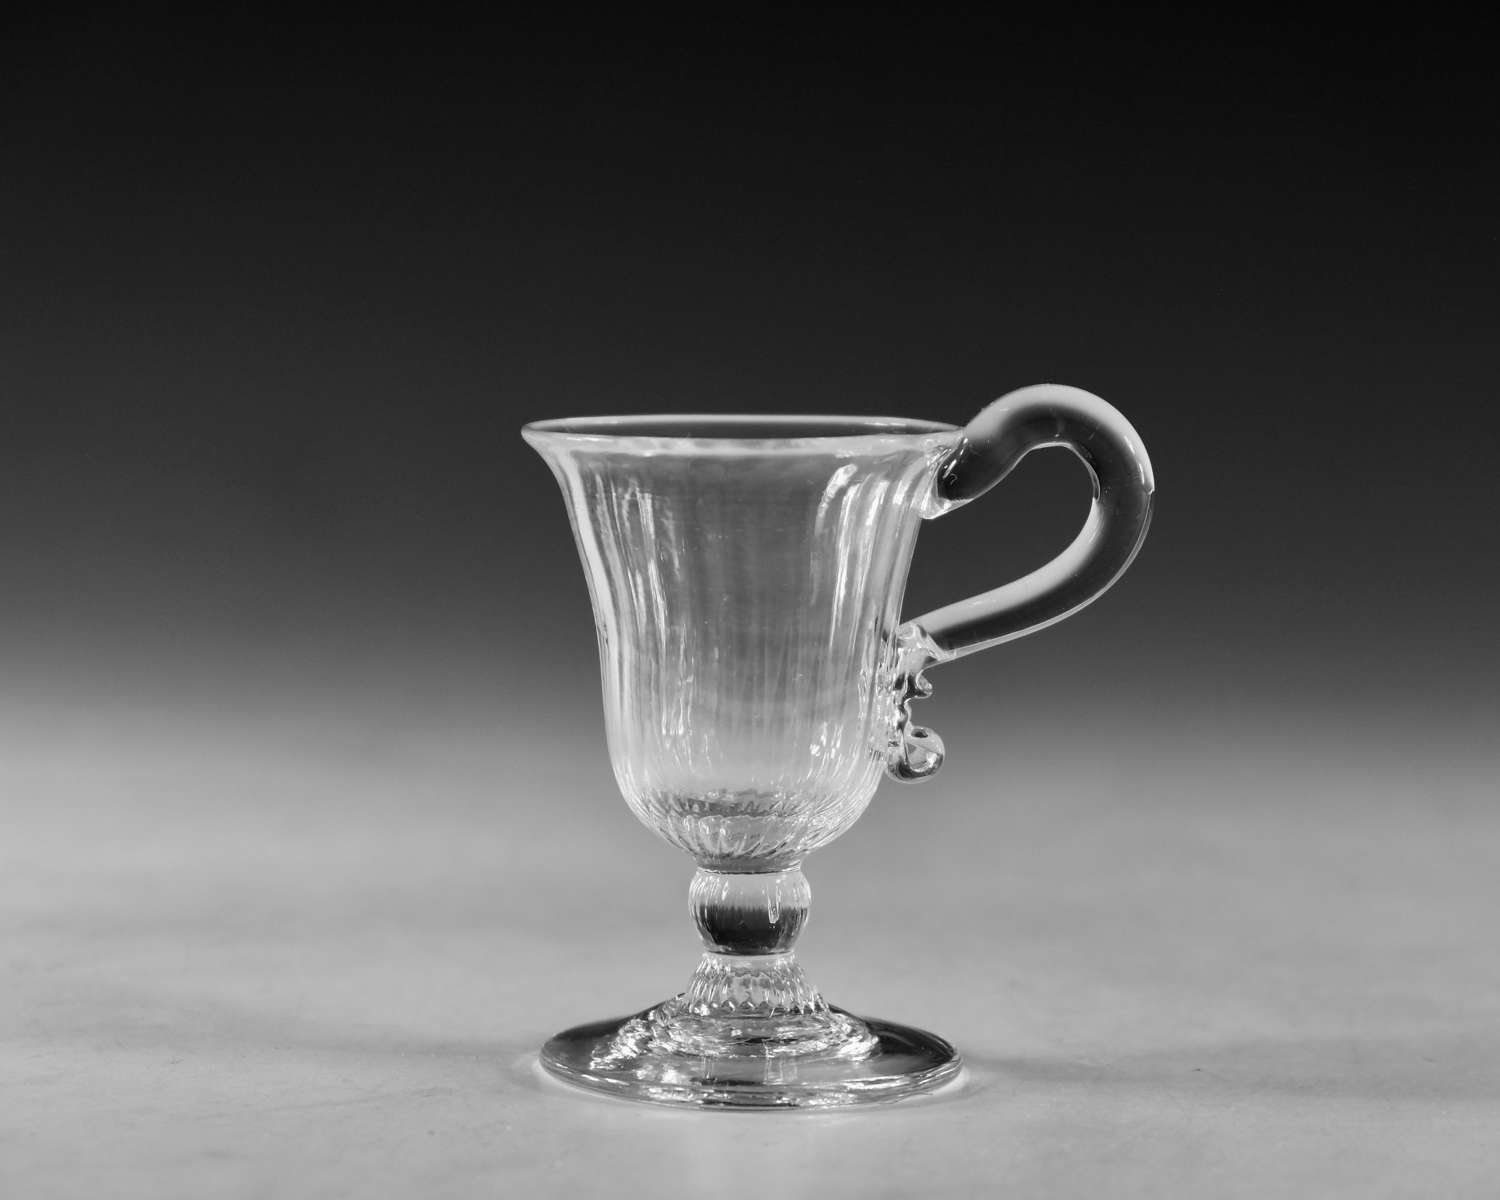 Antique glass - handled jelly / custard glass English c1800